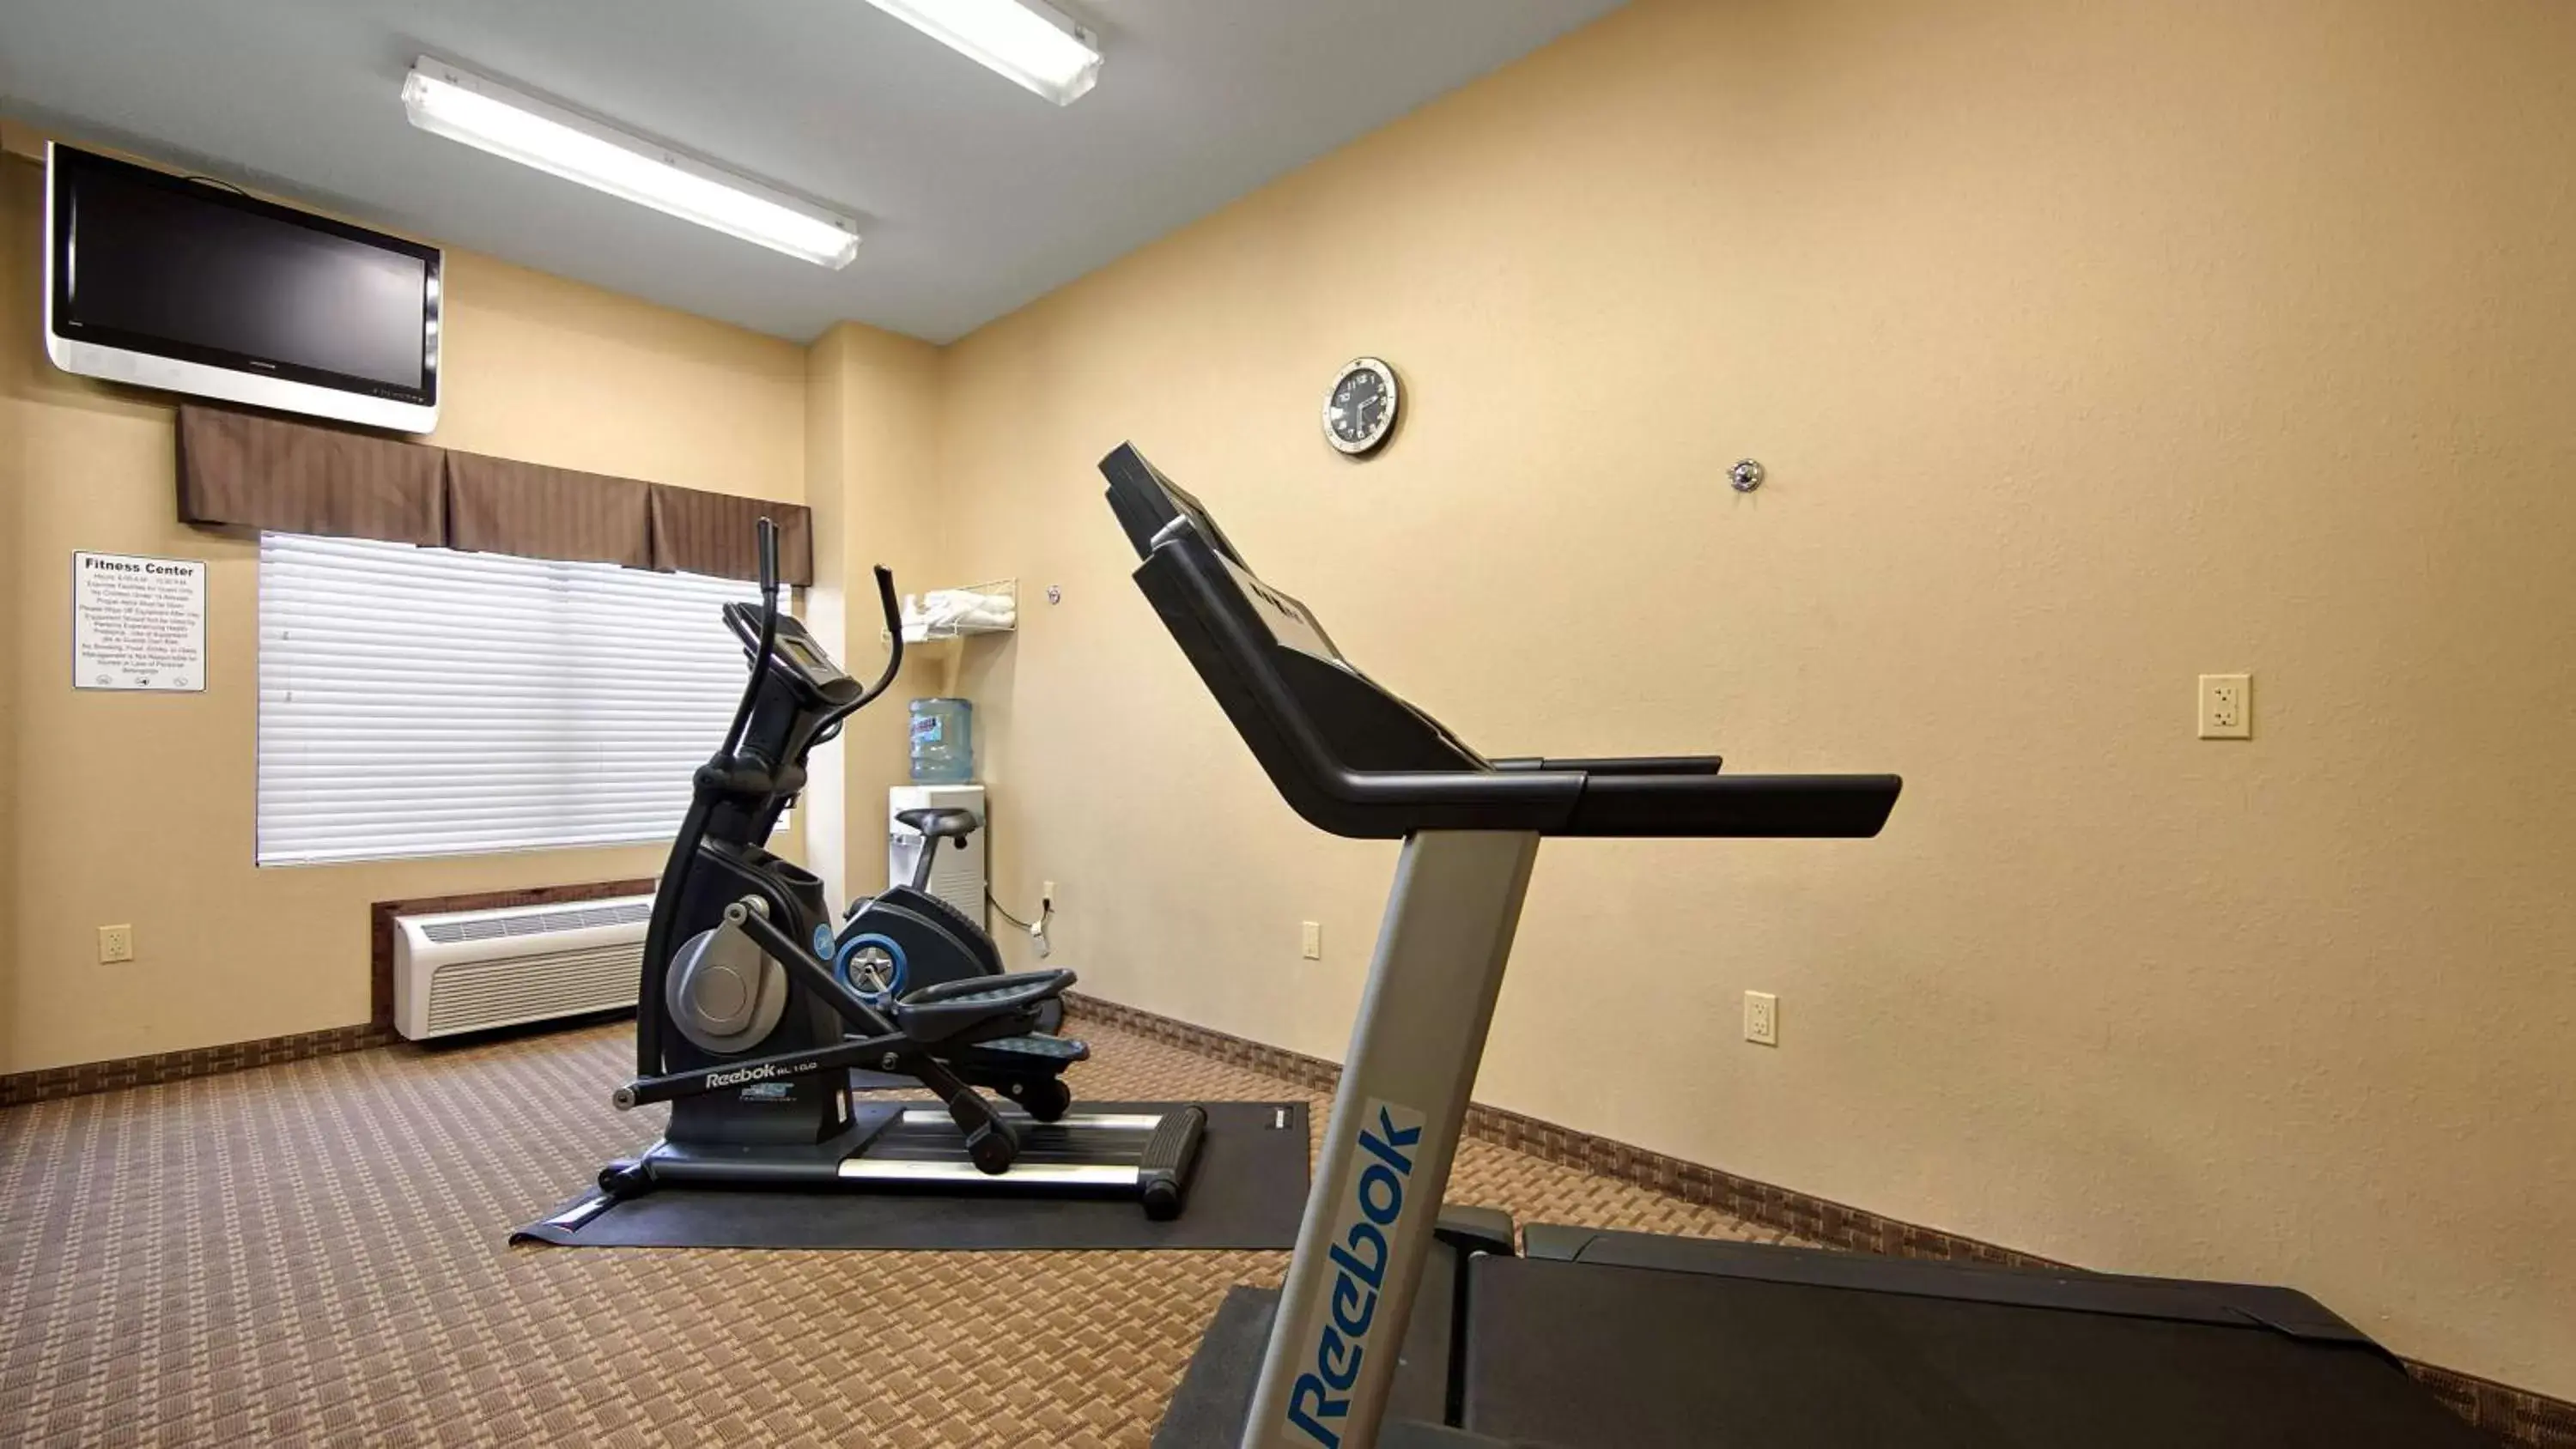 Fitness centre/facilities, Fitness Center/Facilities in Best Western Opp Inn